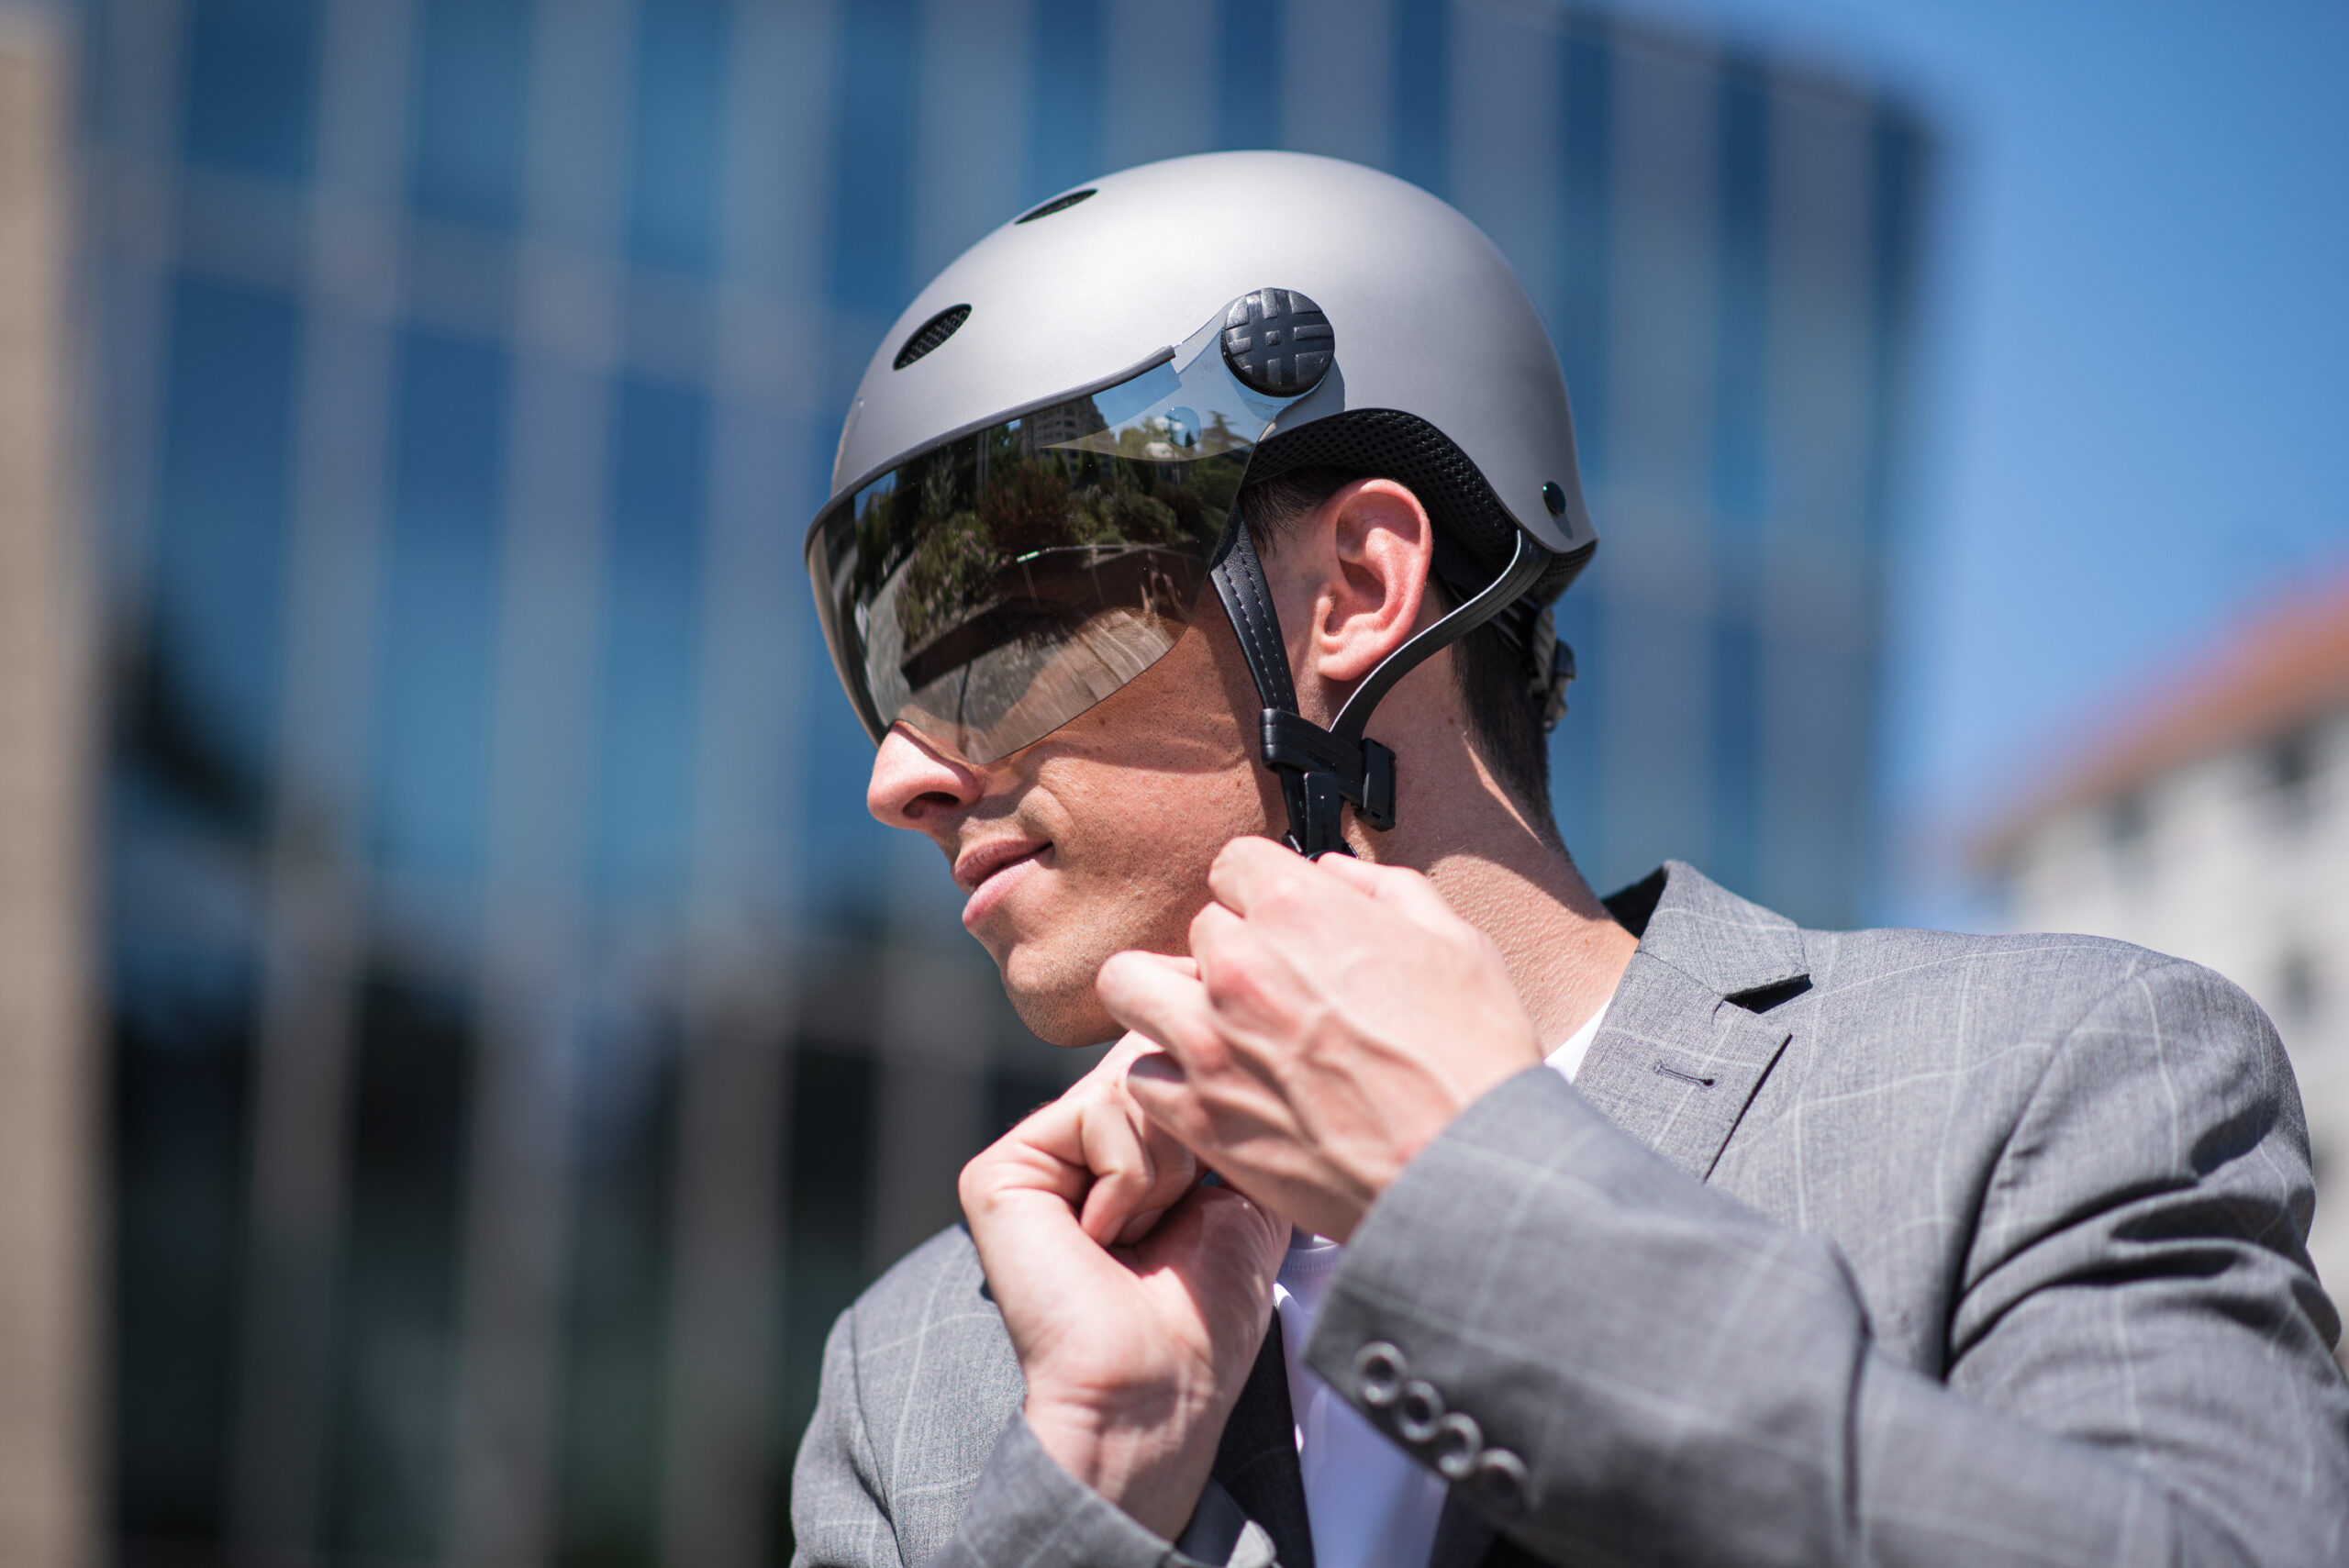 Bike helmets with visor